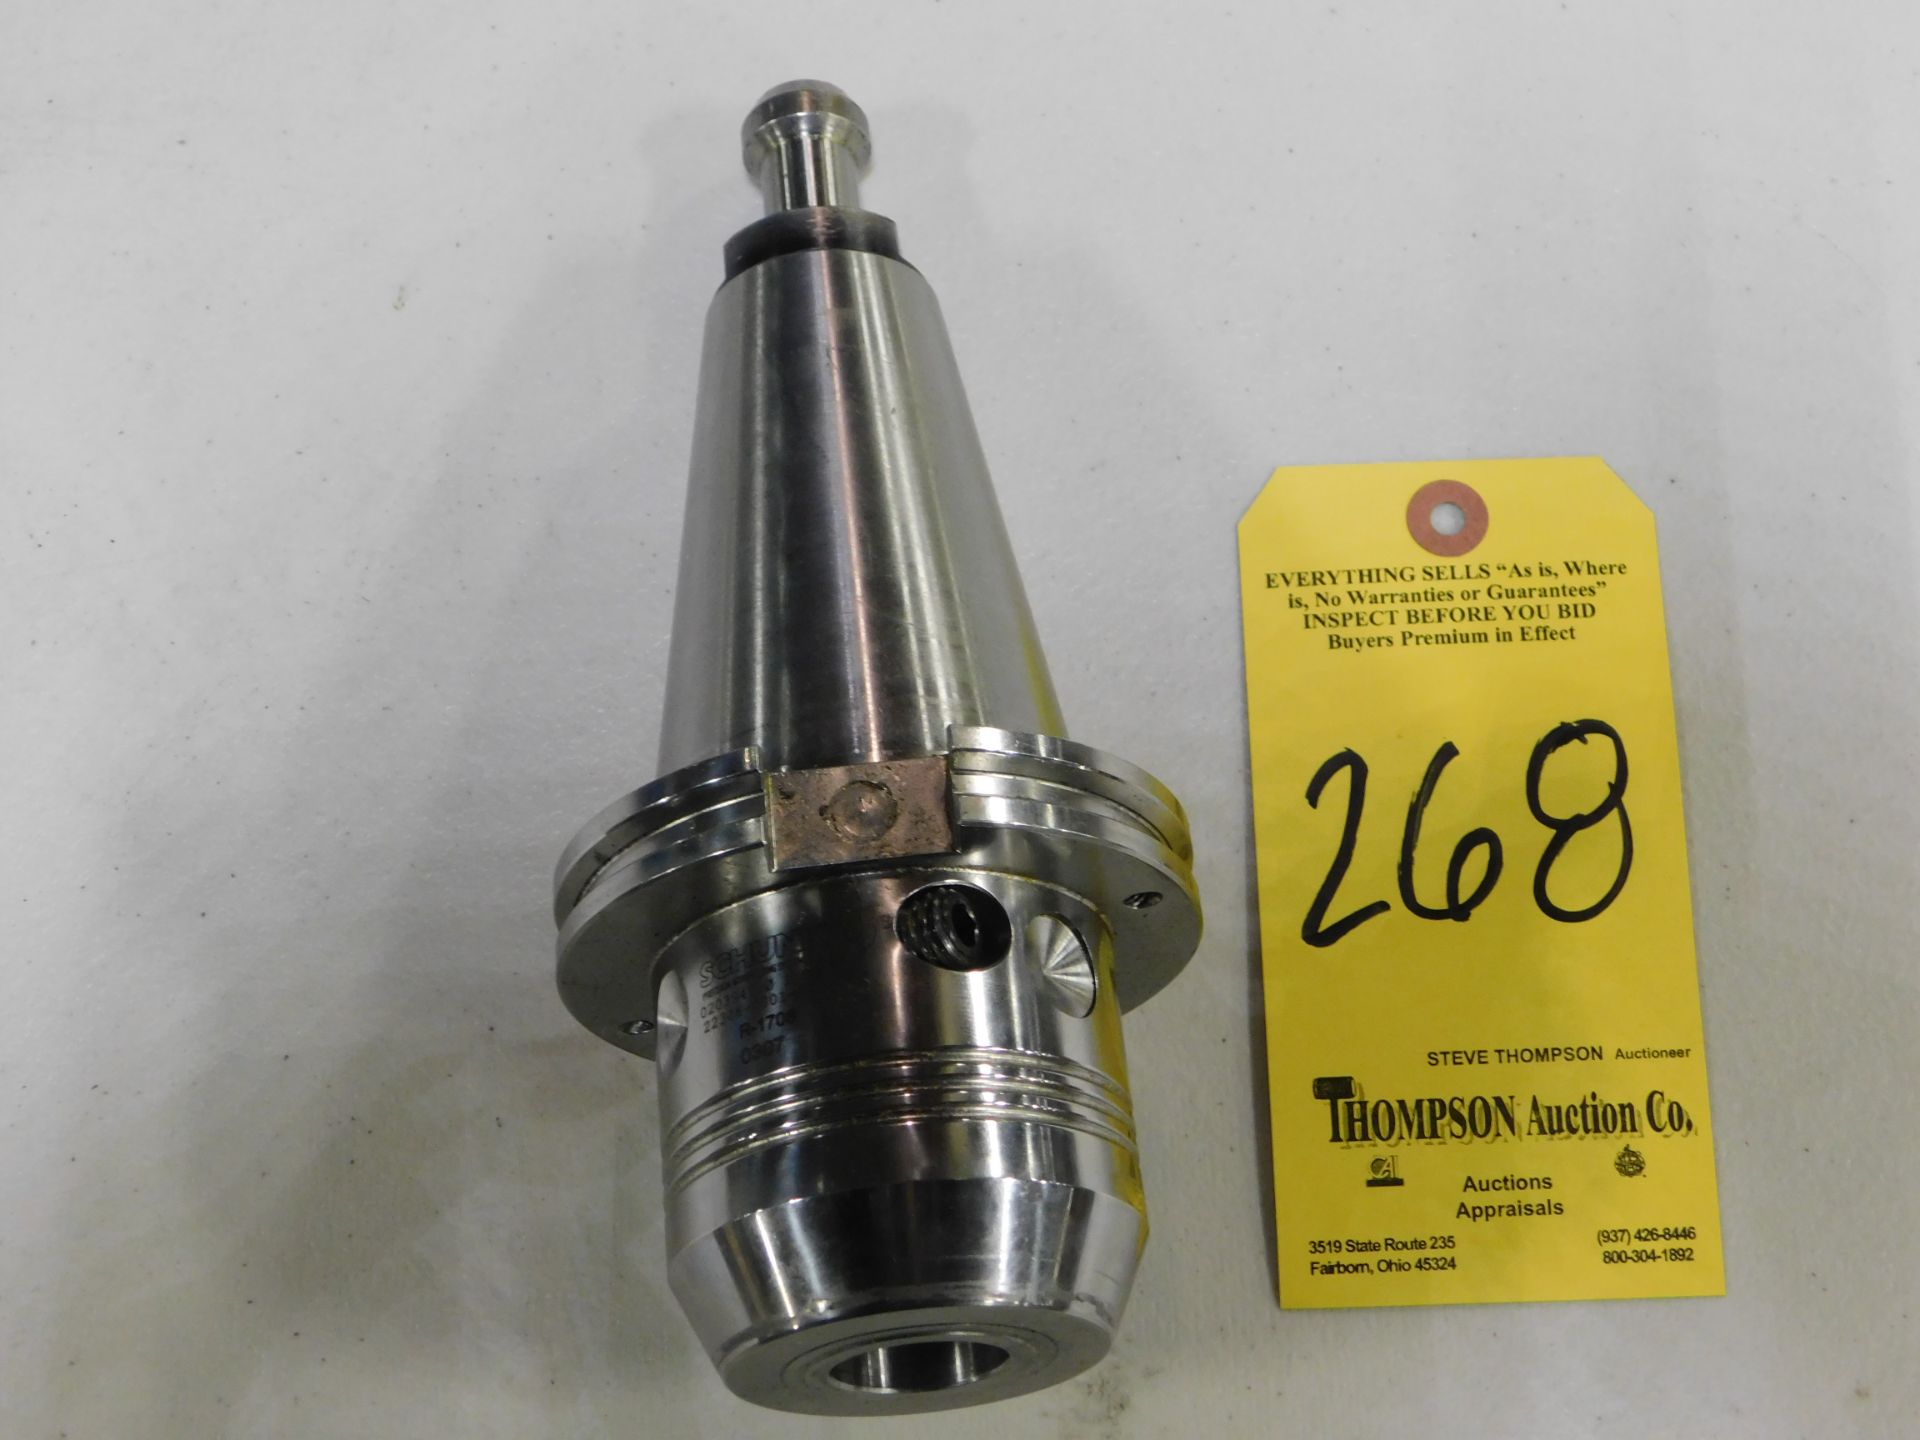 Schunk 203949 Cat 50, 1" Hydraulic Shrink Fit Tool Holder